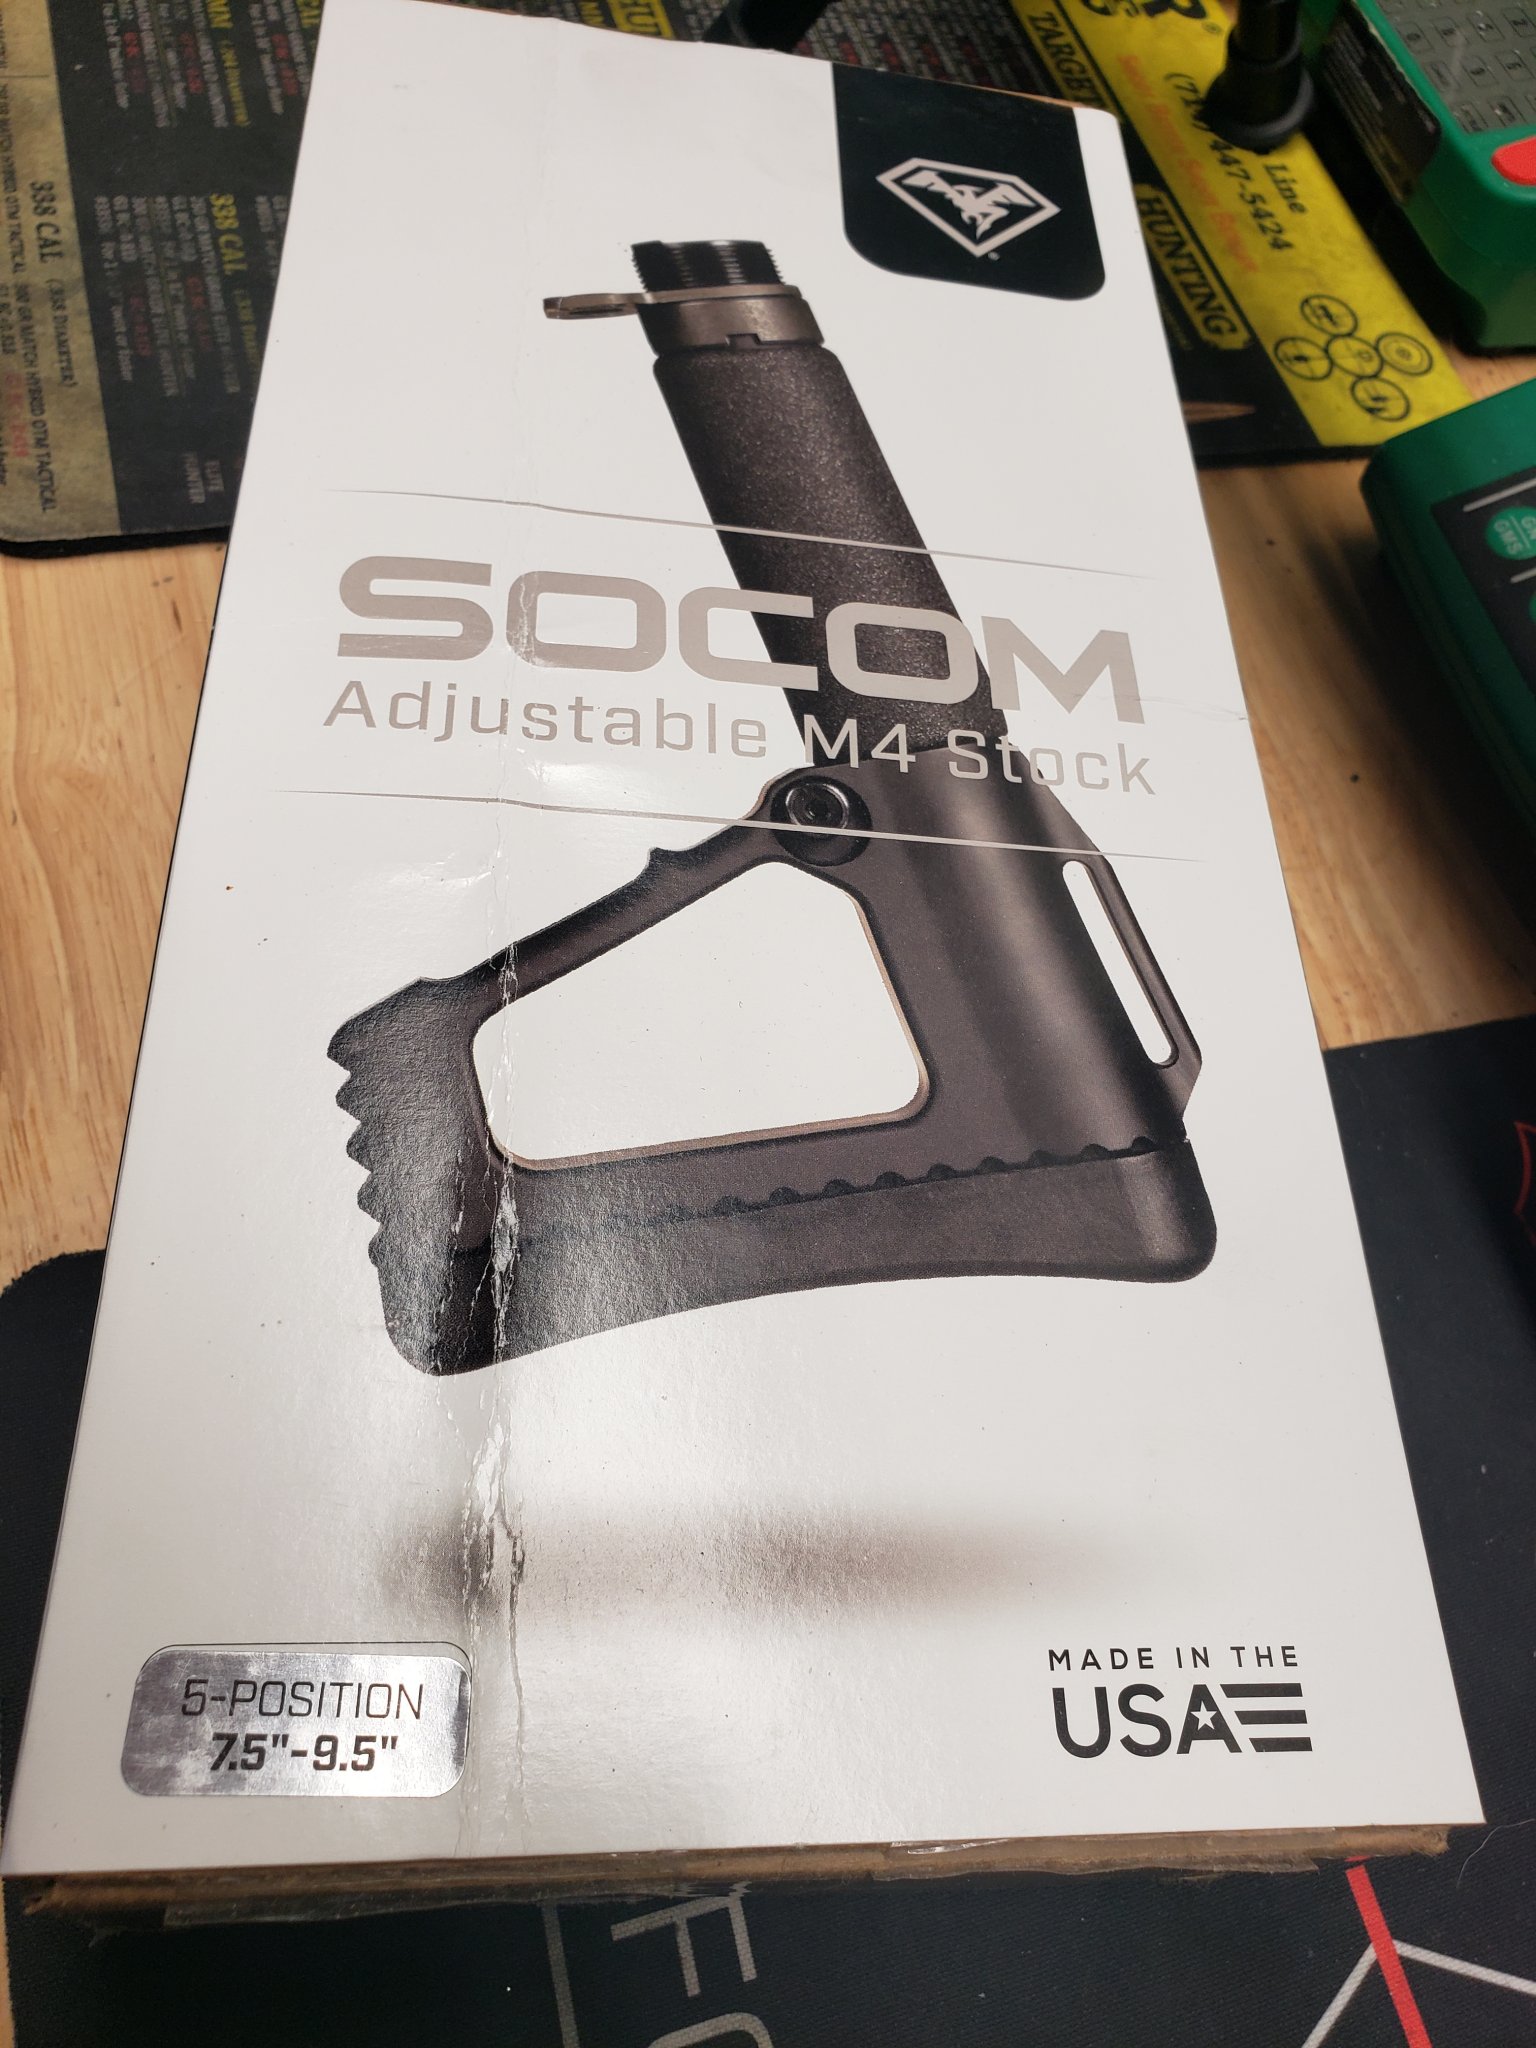 Accessories - Doublestar Ace Socom M4 stock SOLD | Sniper's Hide Forum